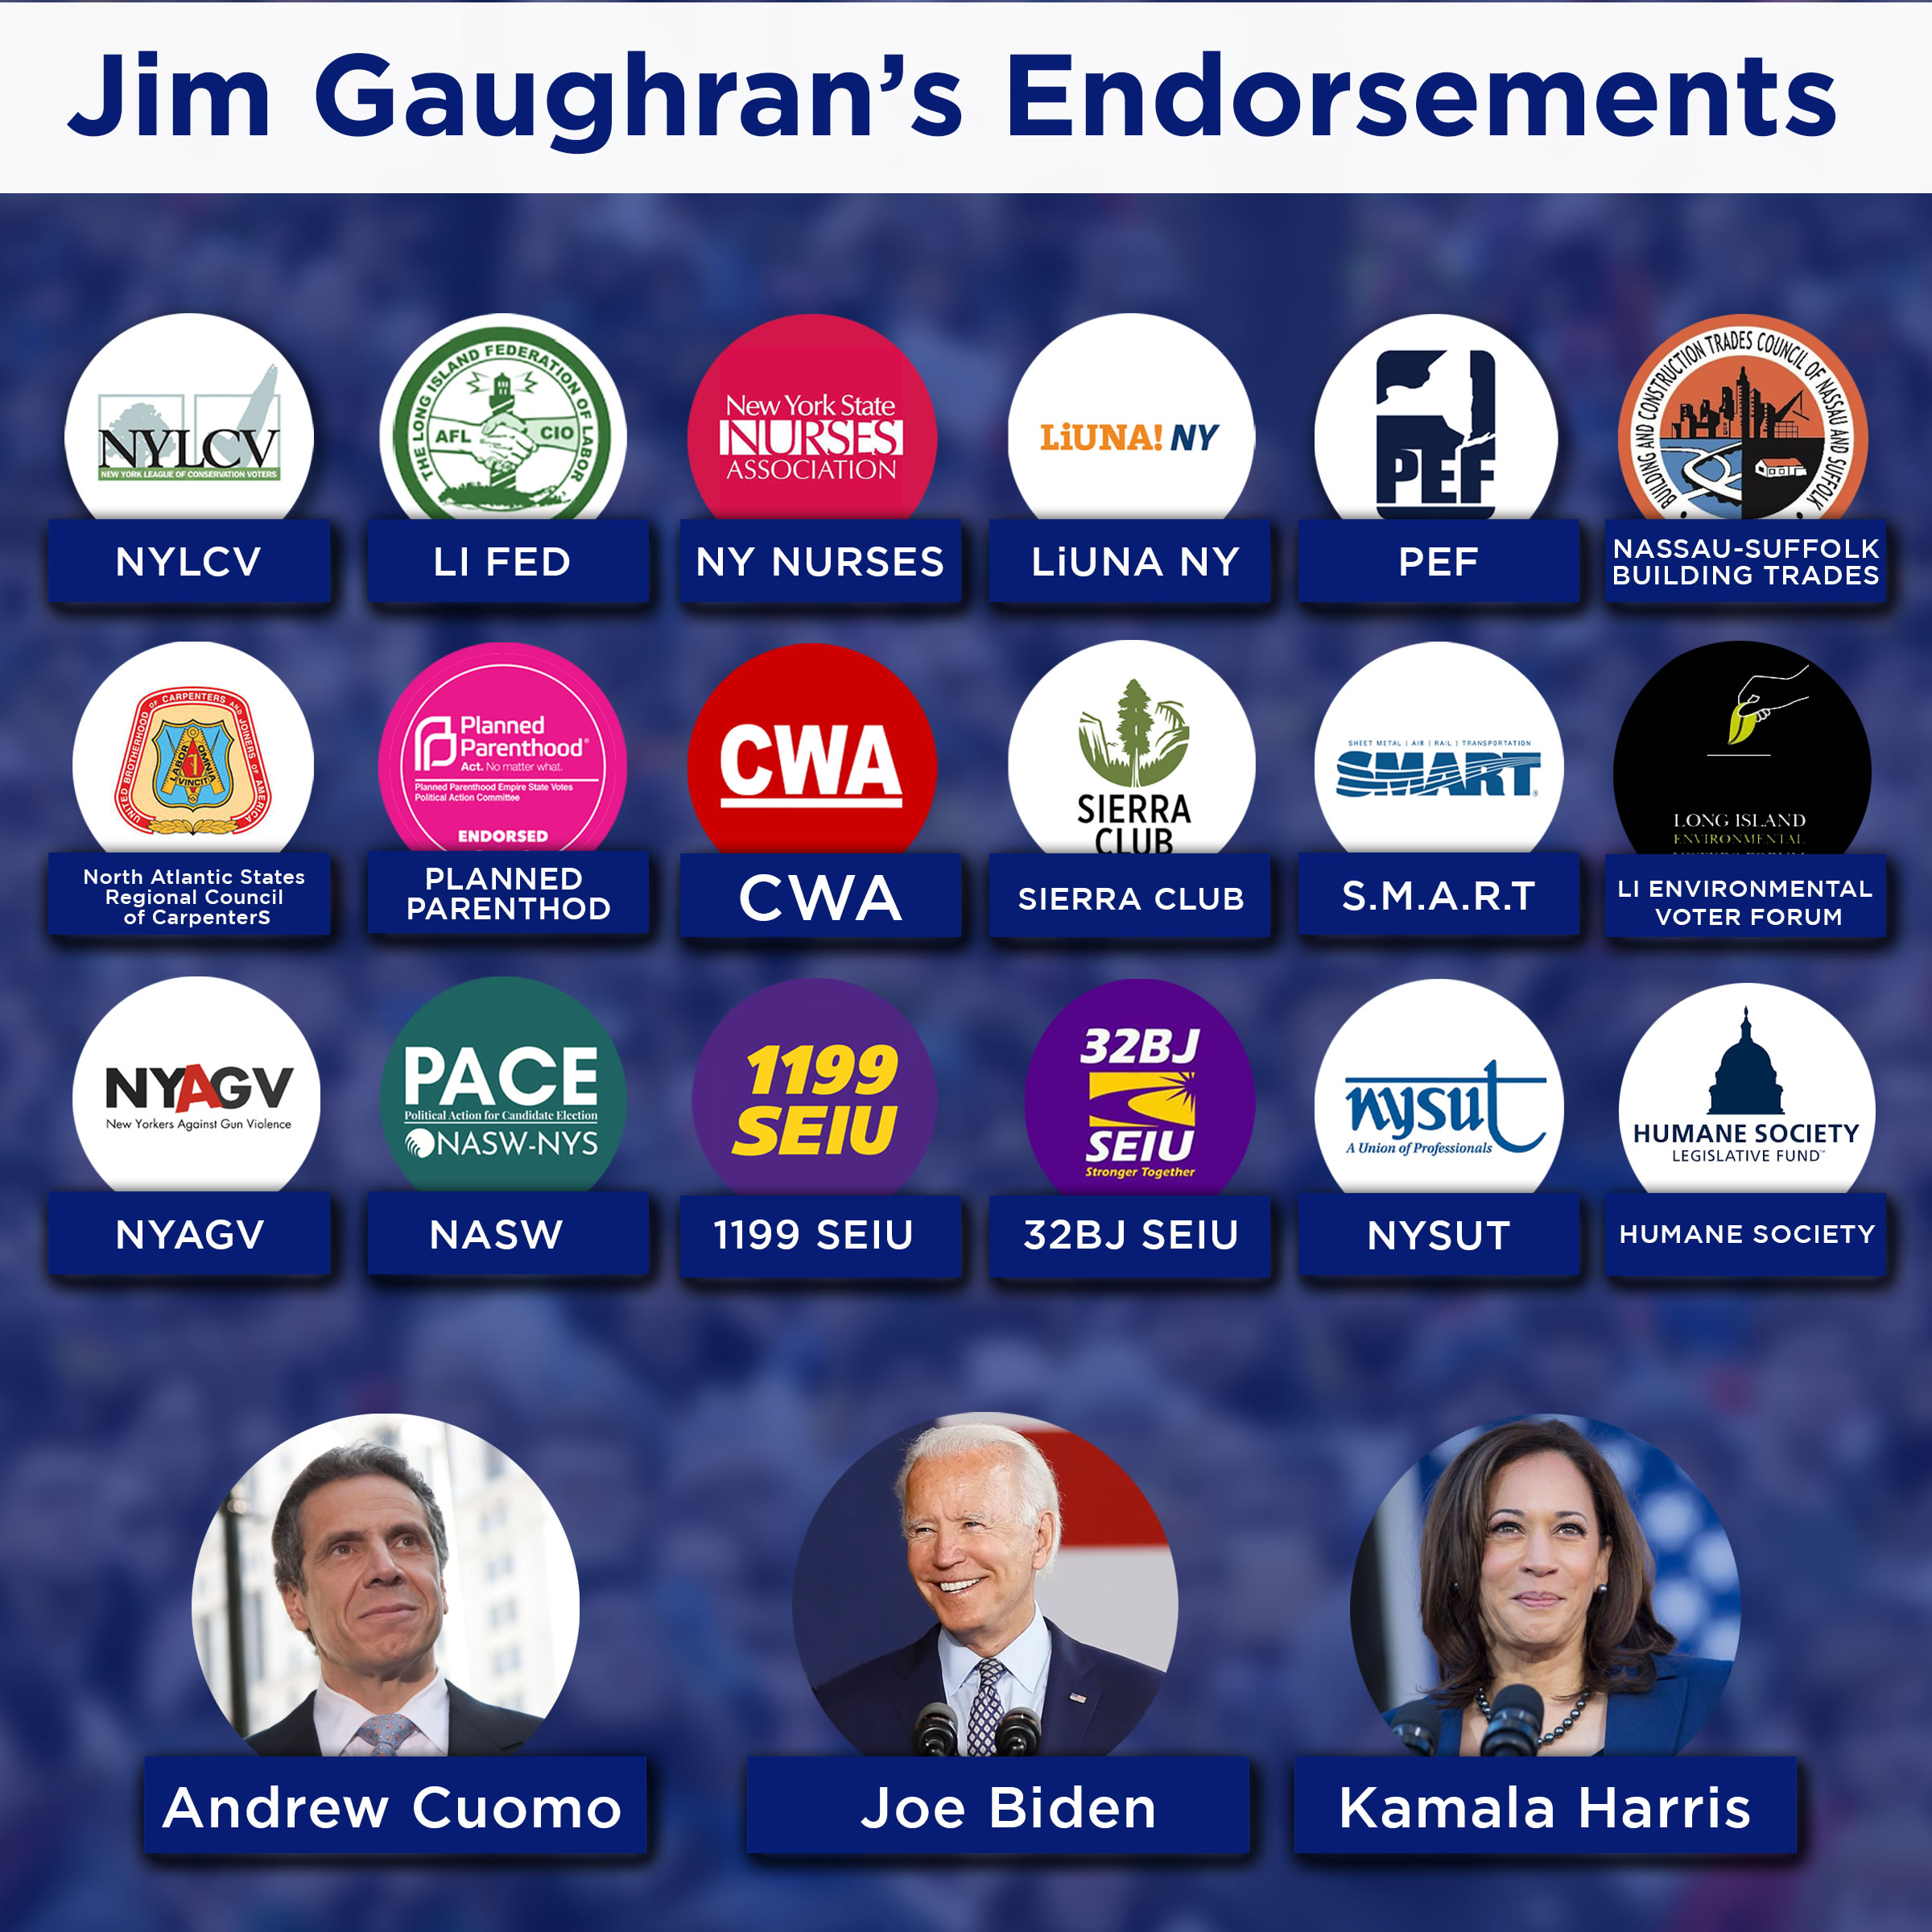 Gaughran - Endorsements image